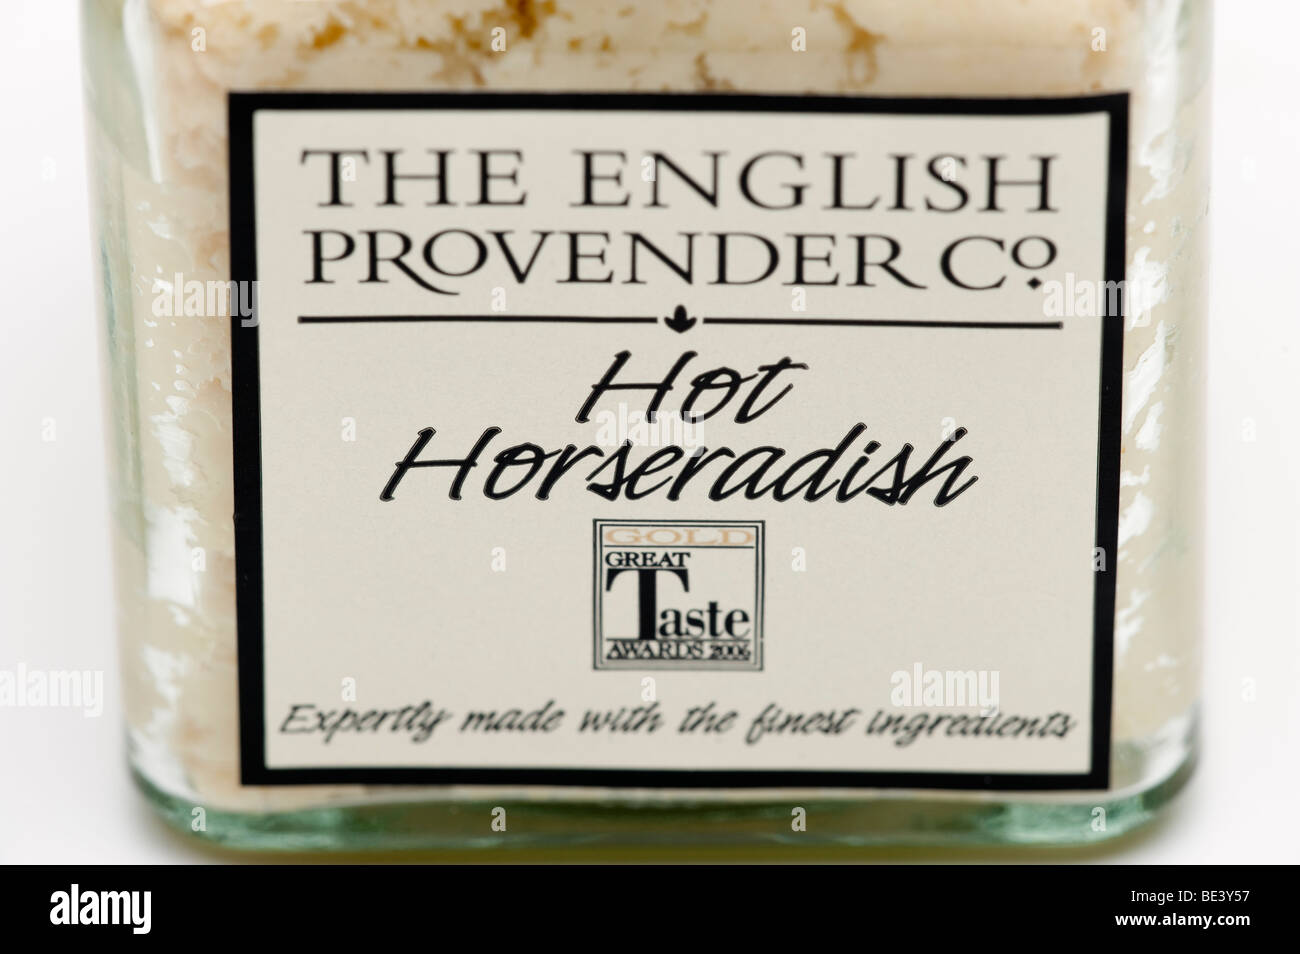 Jar of The English Provender hot Horseradish sauce closeup Stock Photo